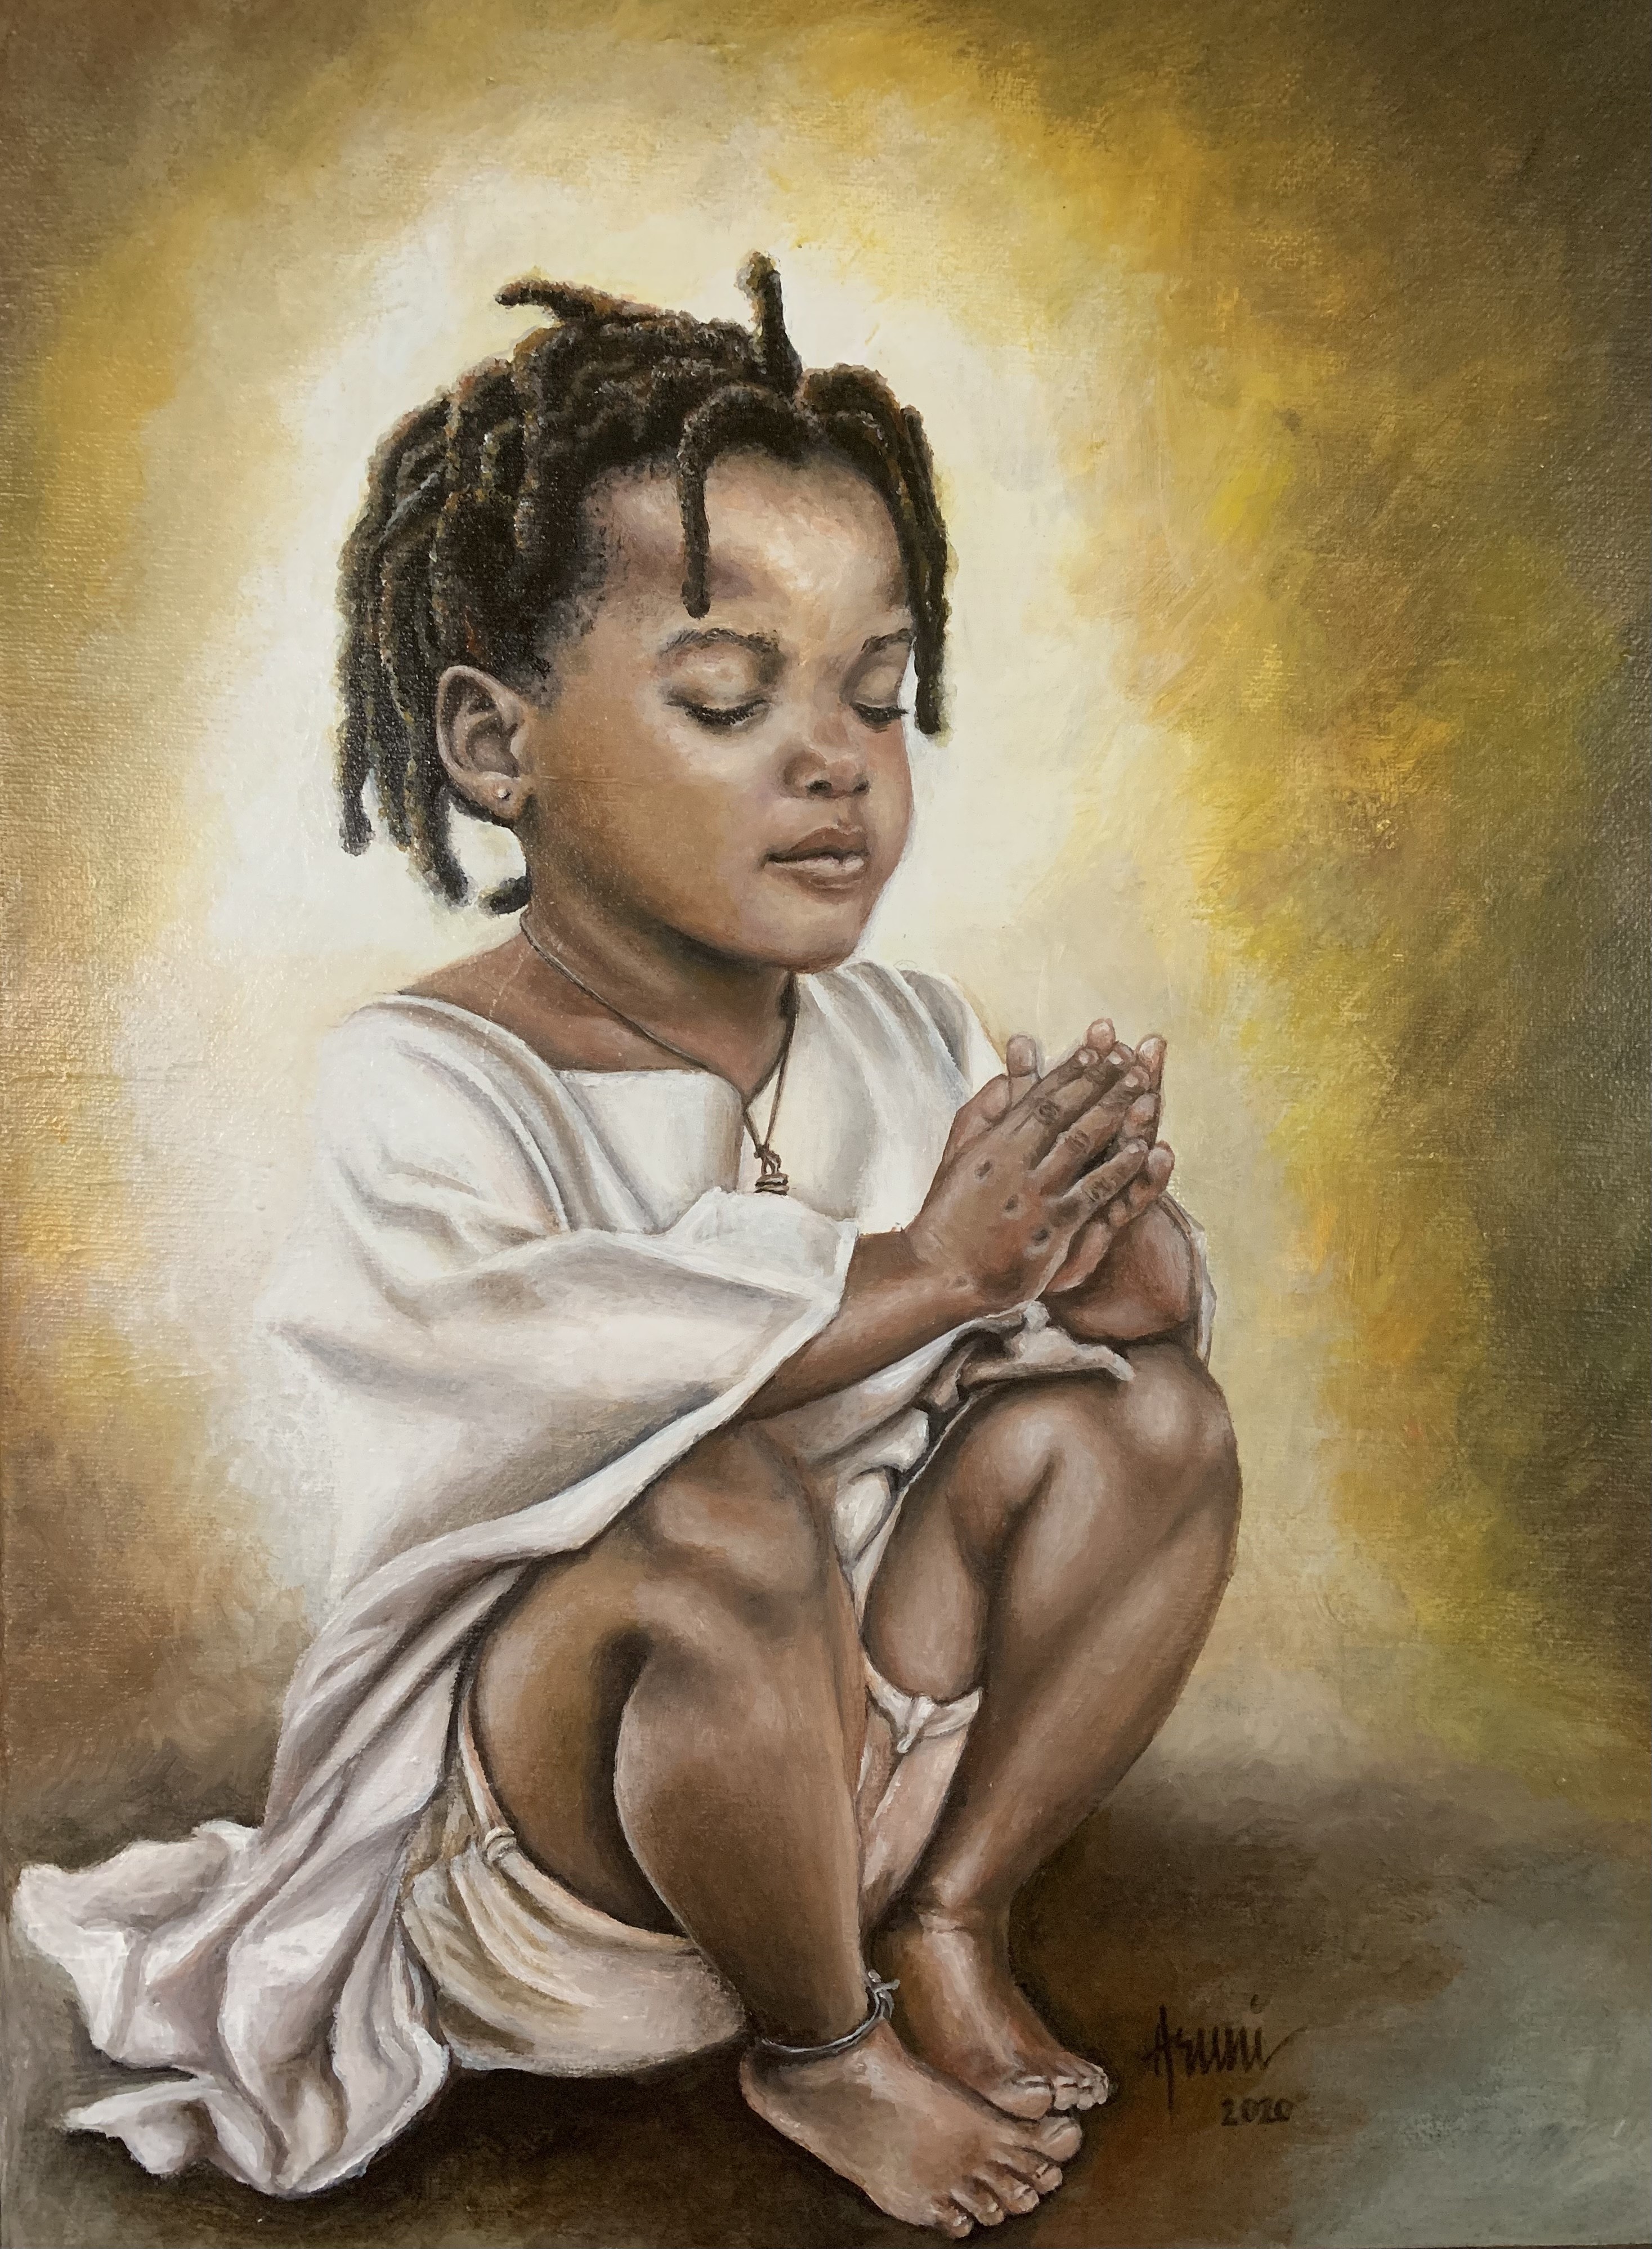 A child’s prayer by Aruni Wijegunawardene